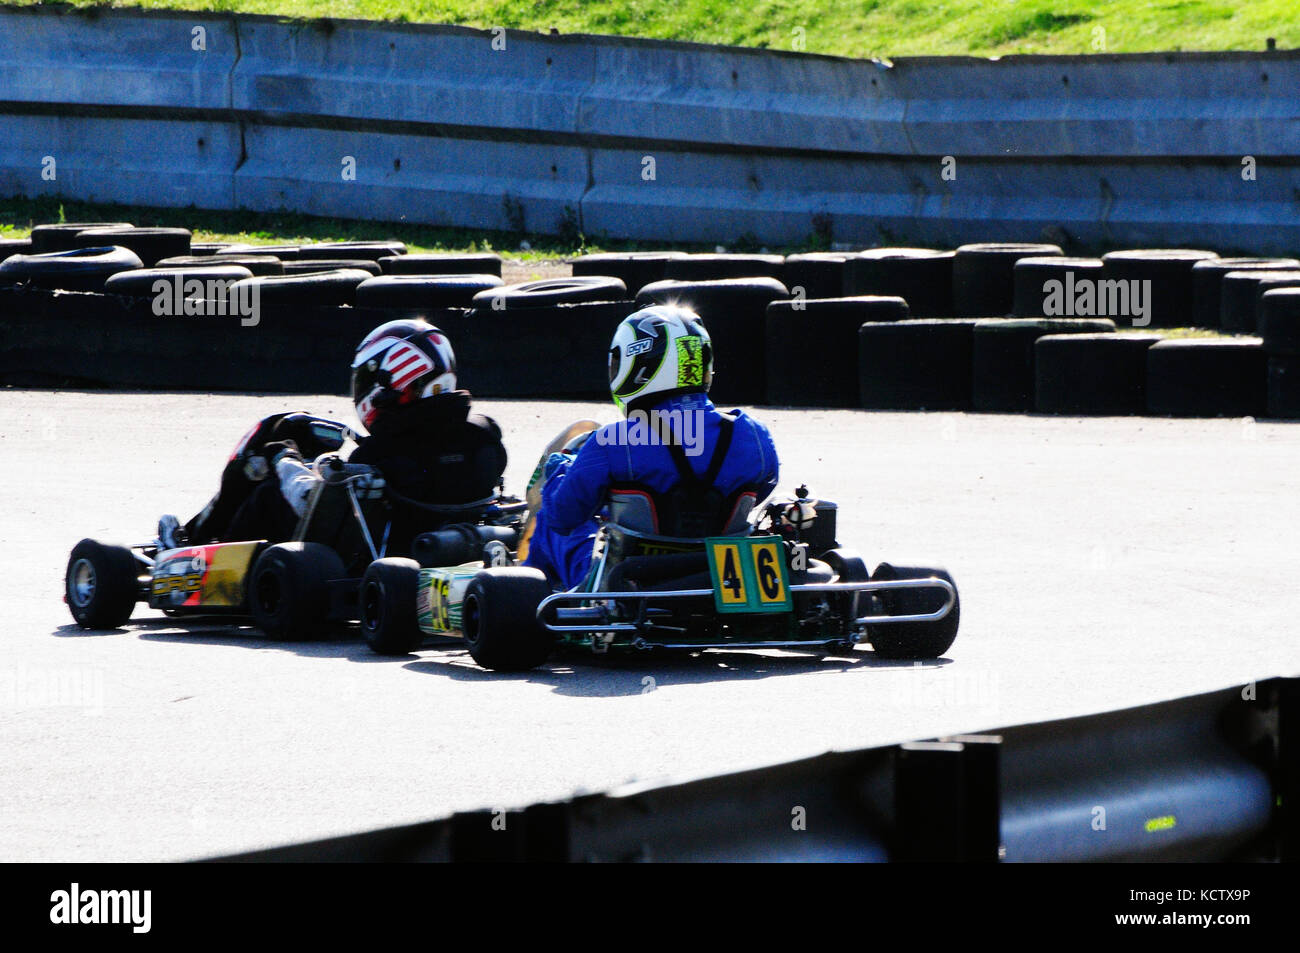 Go karting around a race track Stock Photo